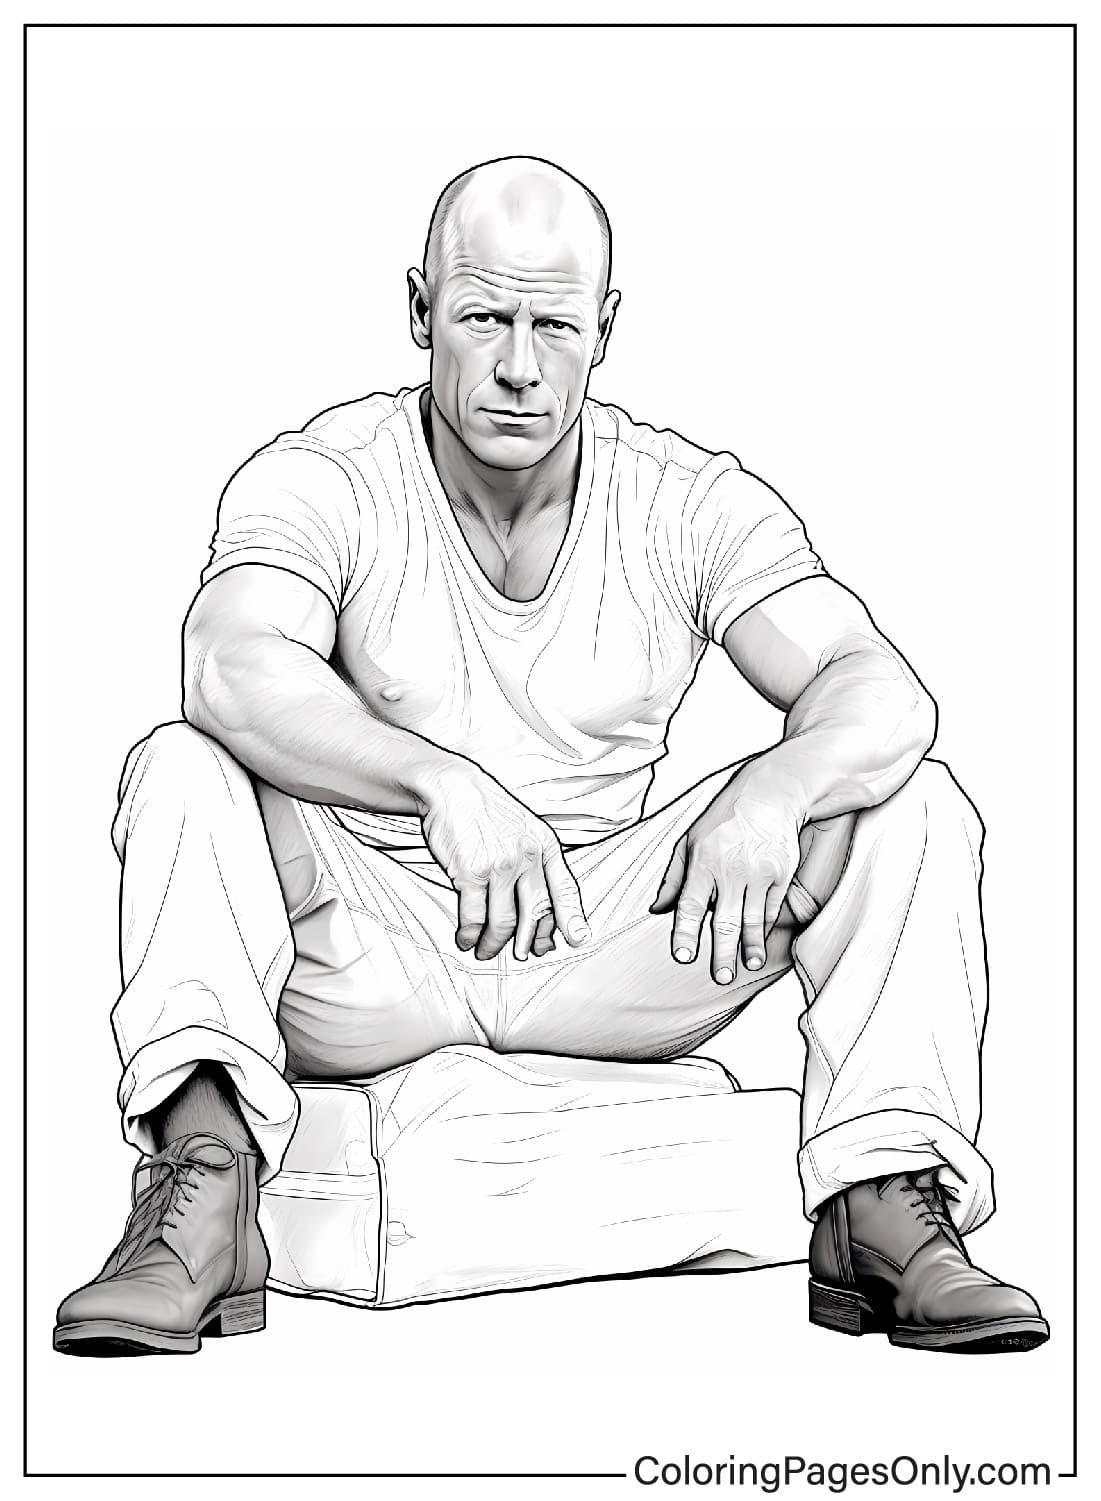 Bruce Willis kleurplaat om af te drukken van Bruce Willis